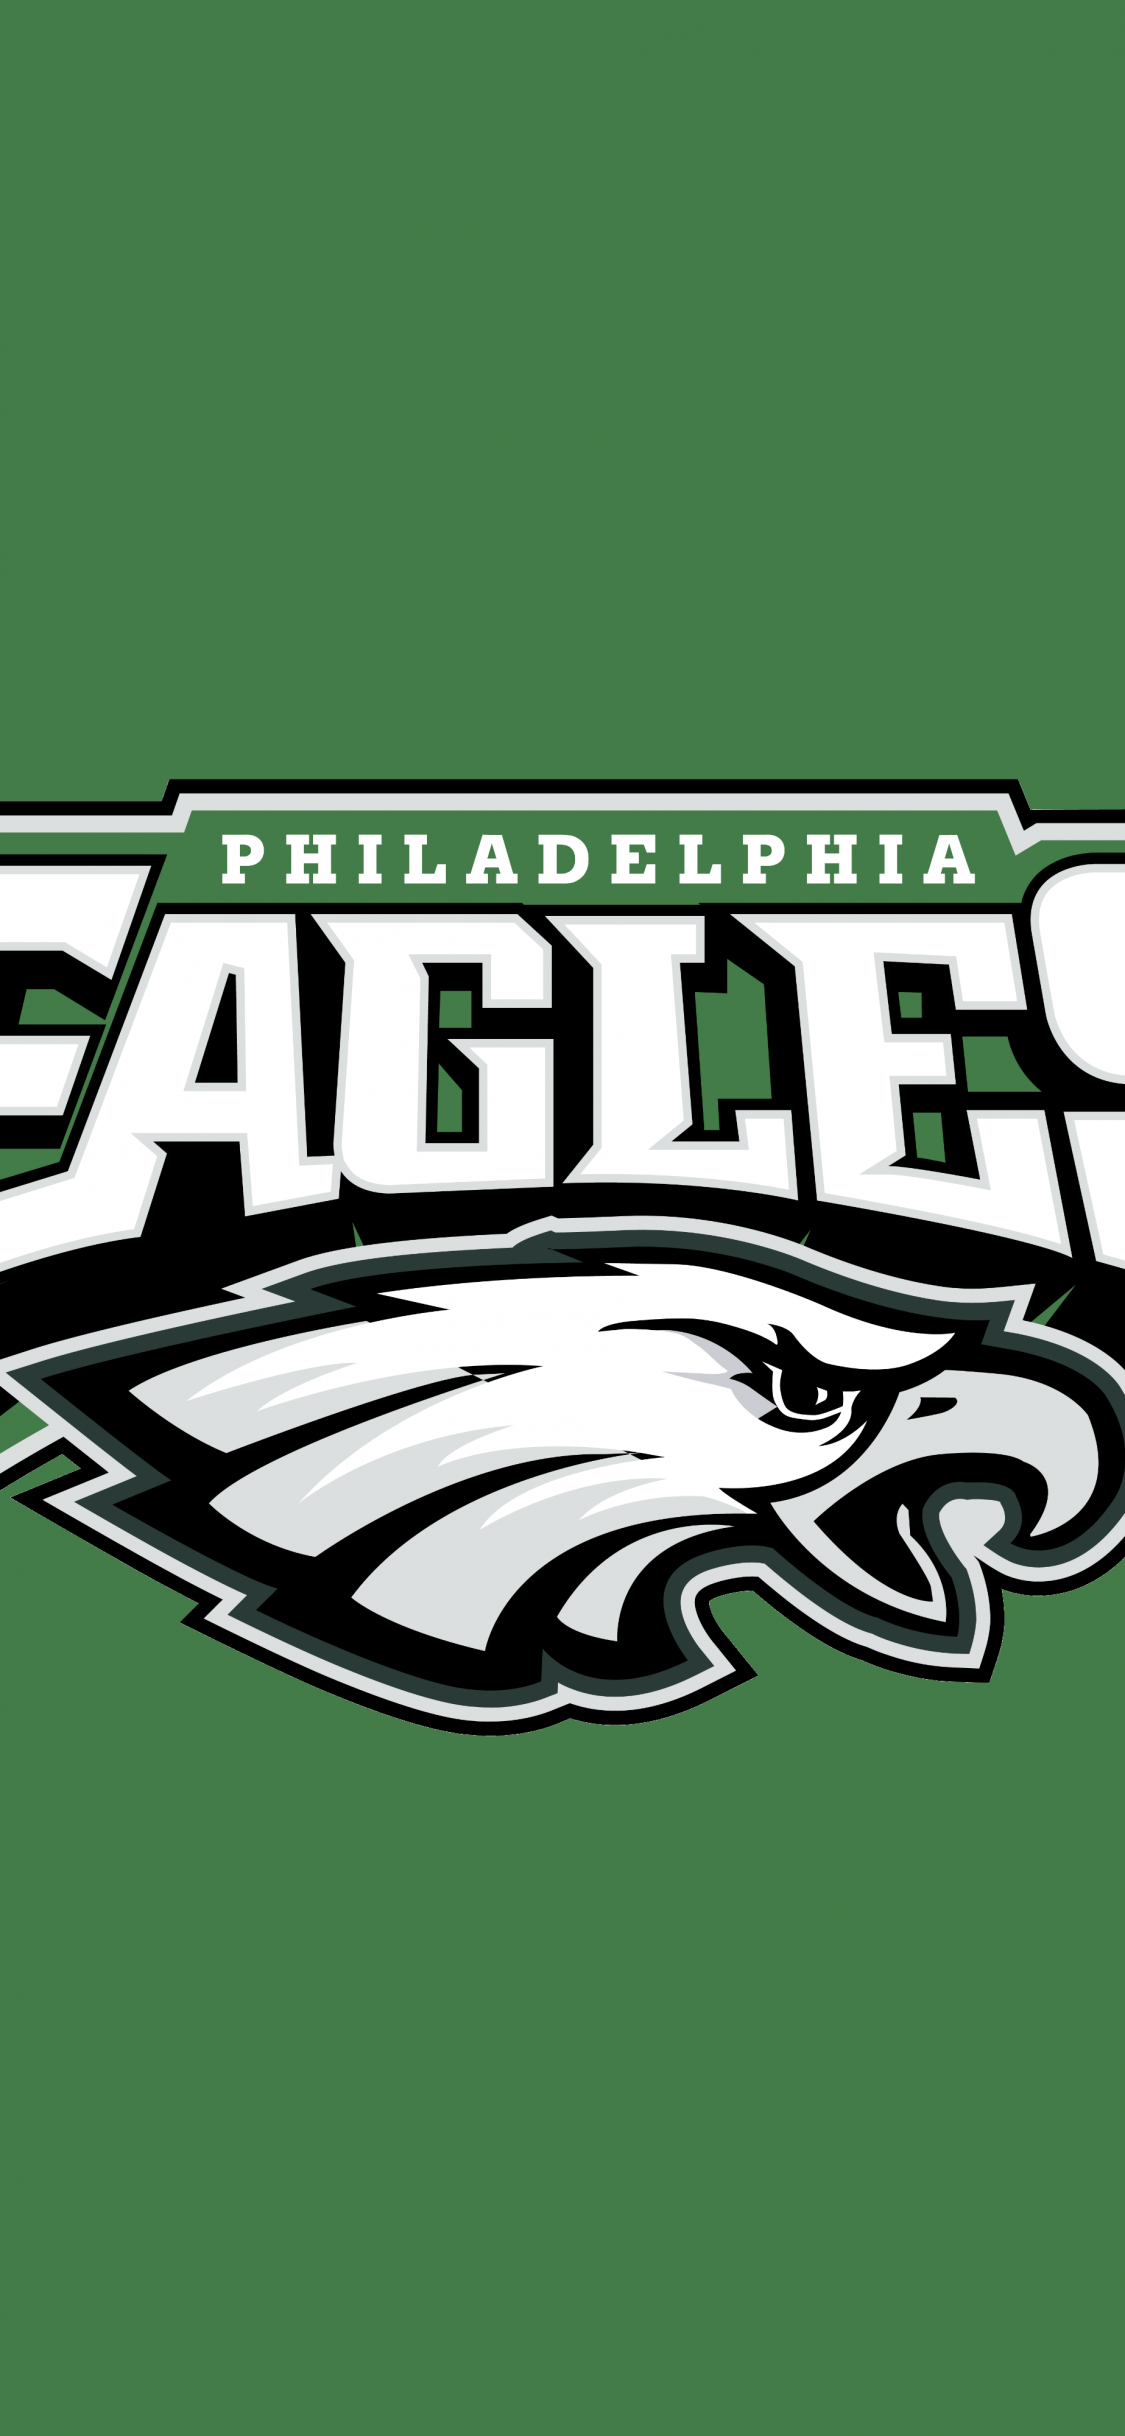 Philadelphia Eagles Iphone Wallpapers